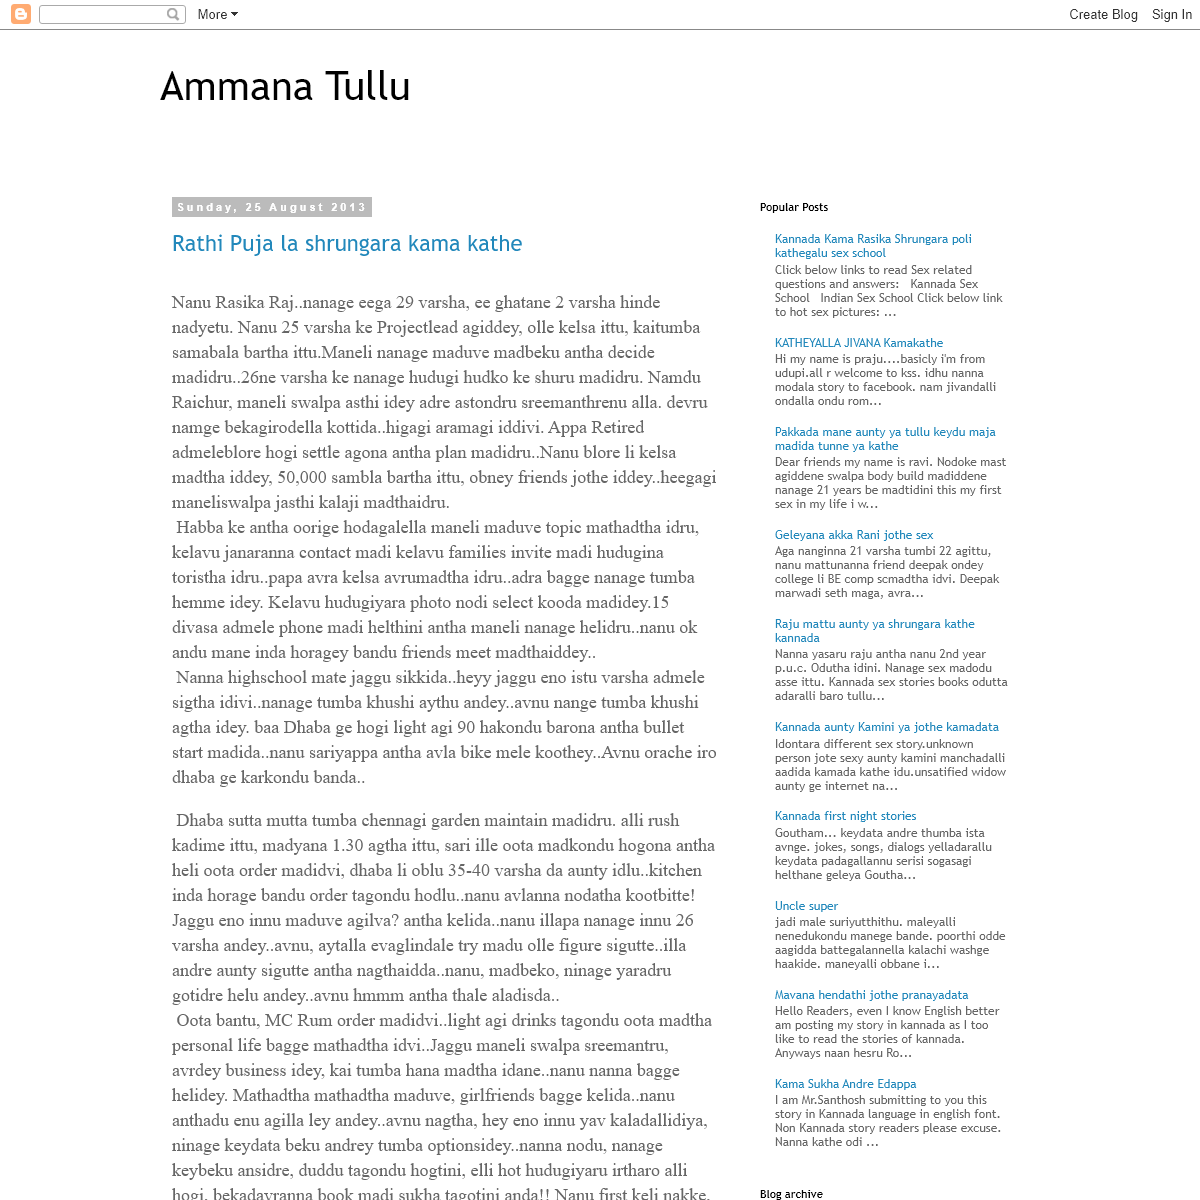 A complete backup of https://ammanatullu.blogspot.com/2013/08/